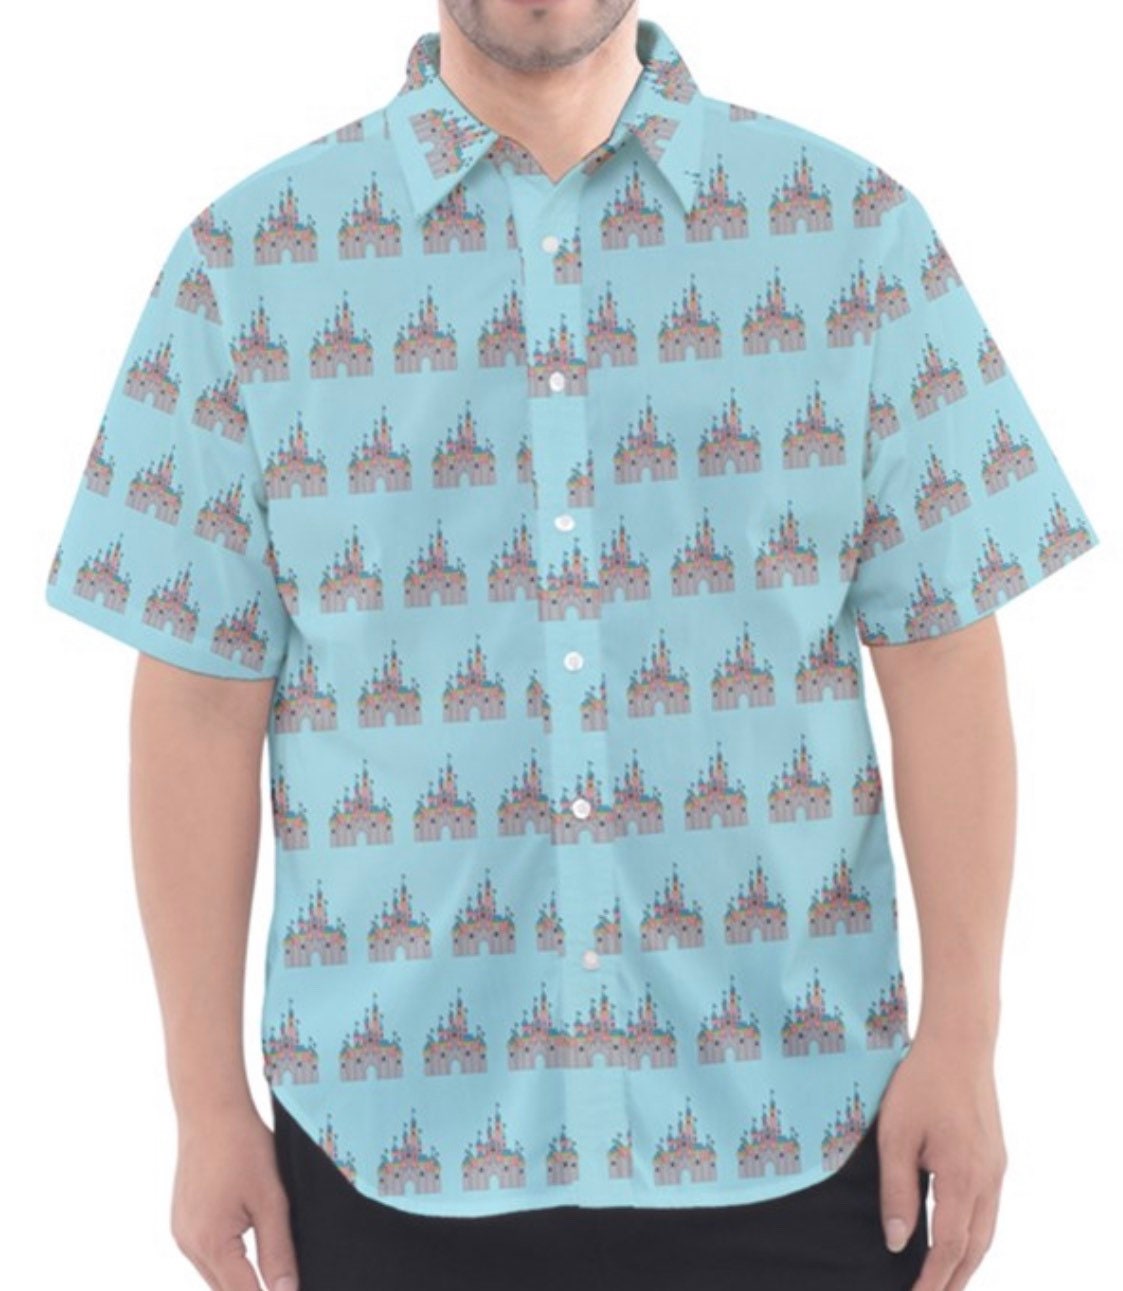 Castle Disneyland Inspired Print Button Up Hawaiin Shirt